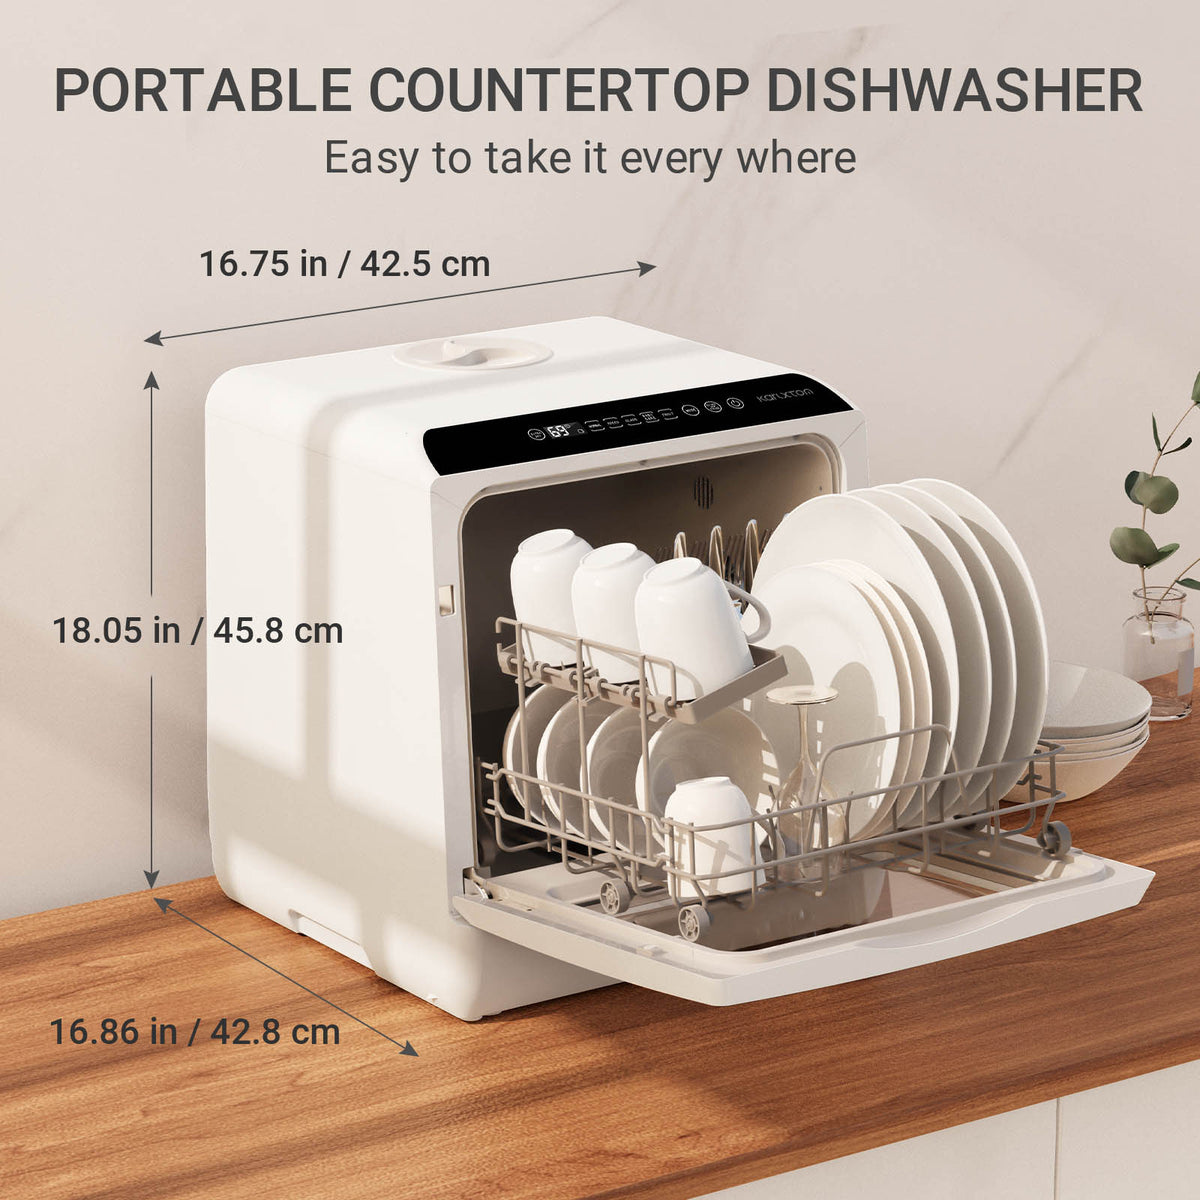 countertop dishwasher, portable dishwasher no hookup. Countertop